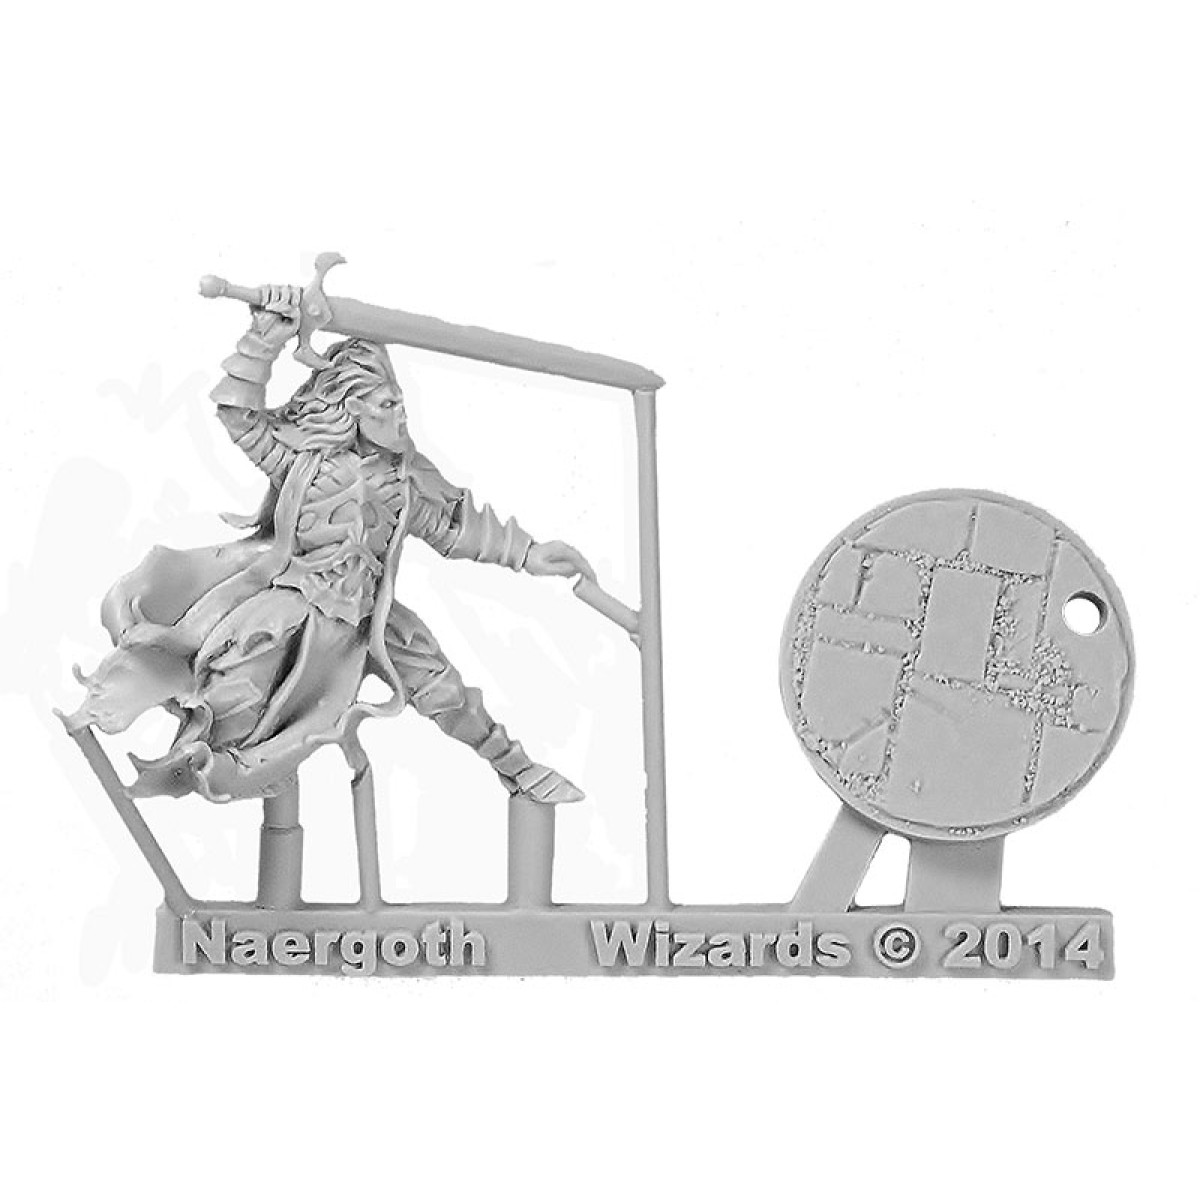 Dungeons & Dragons - Figurines D&D Collectors Series Miniatures à peindre  Naergoth Bladelord & Rath Modar - Figurine-Discount